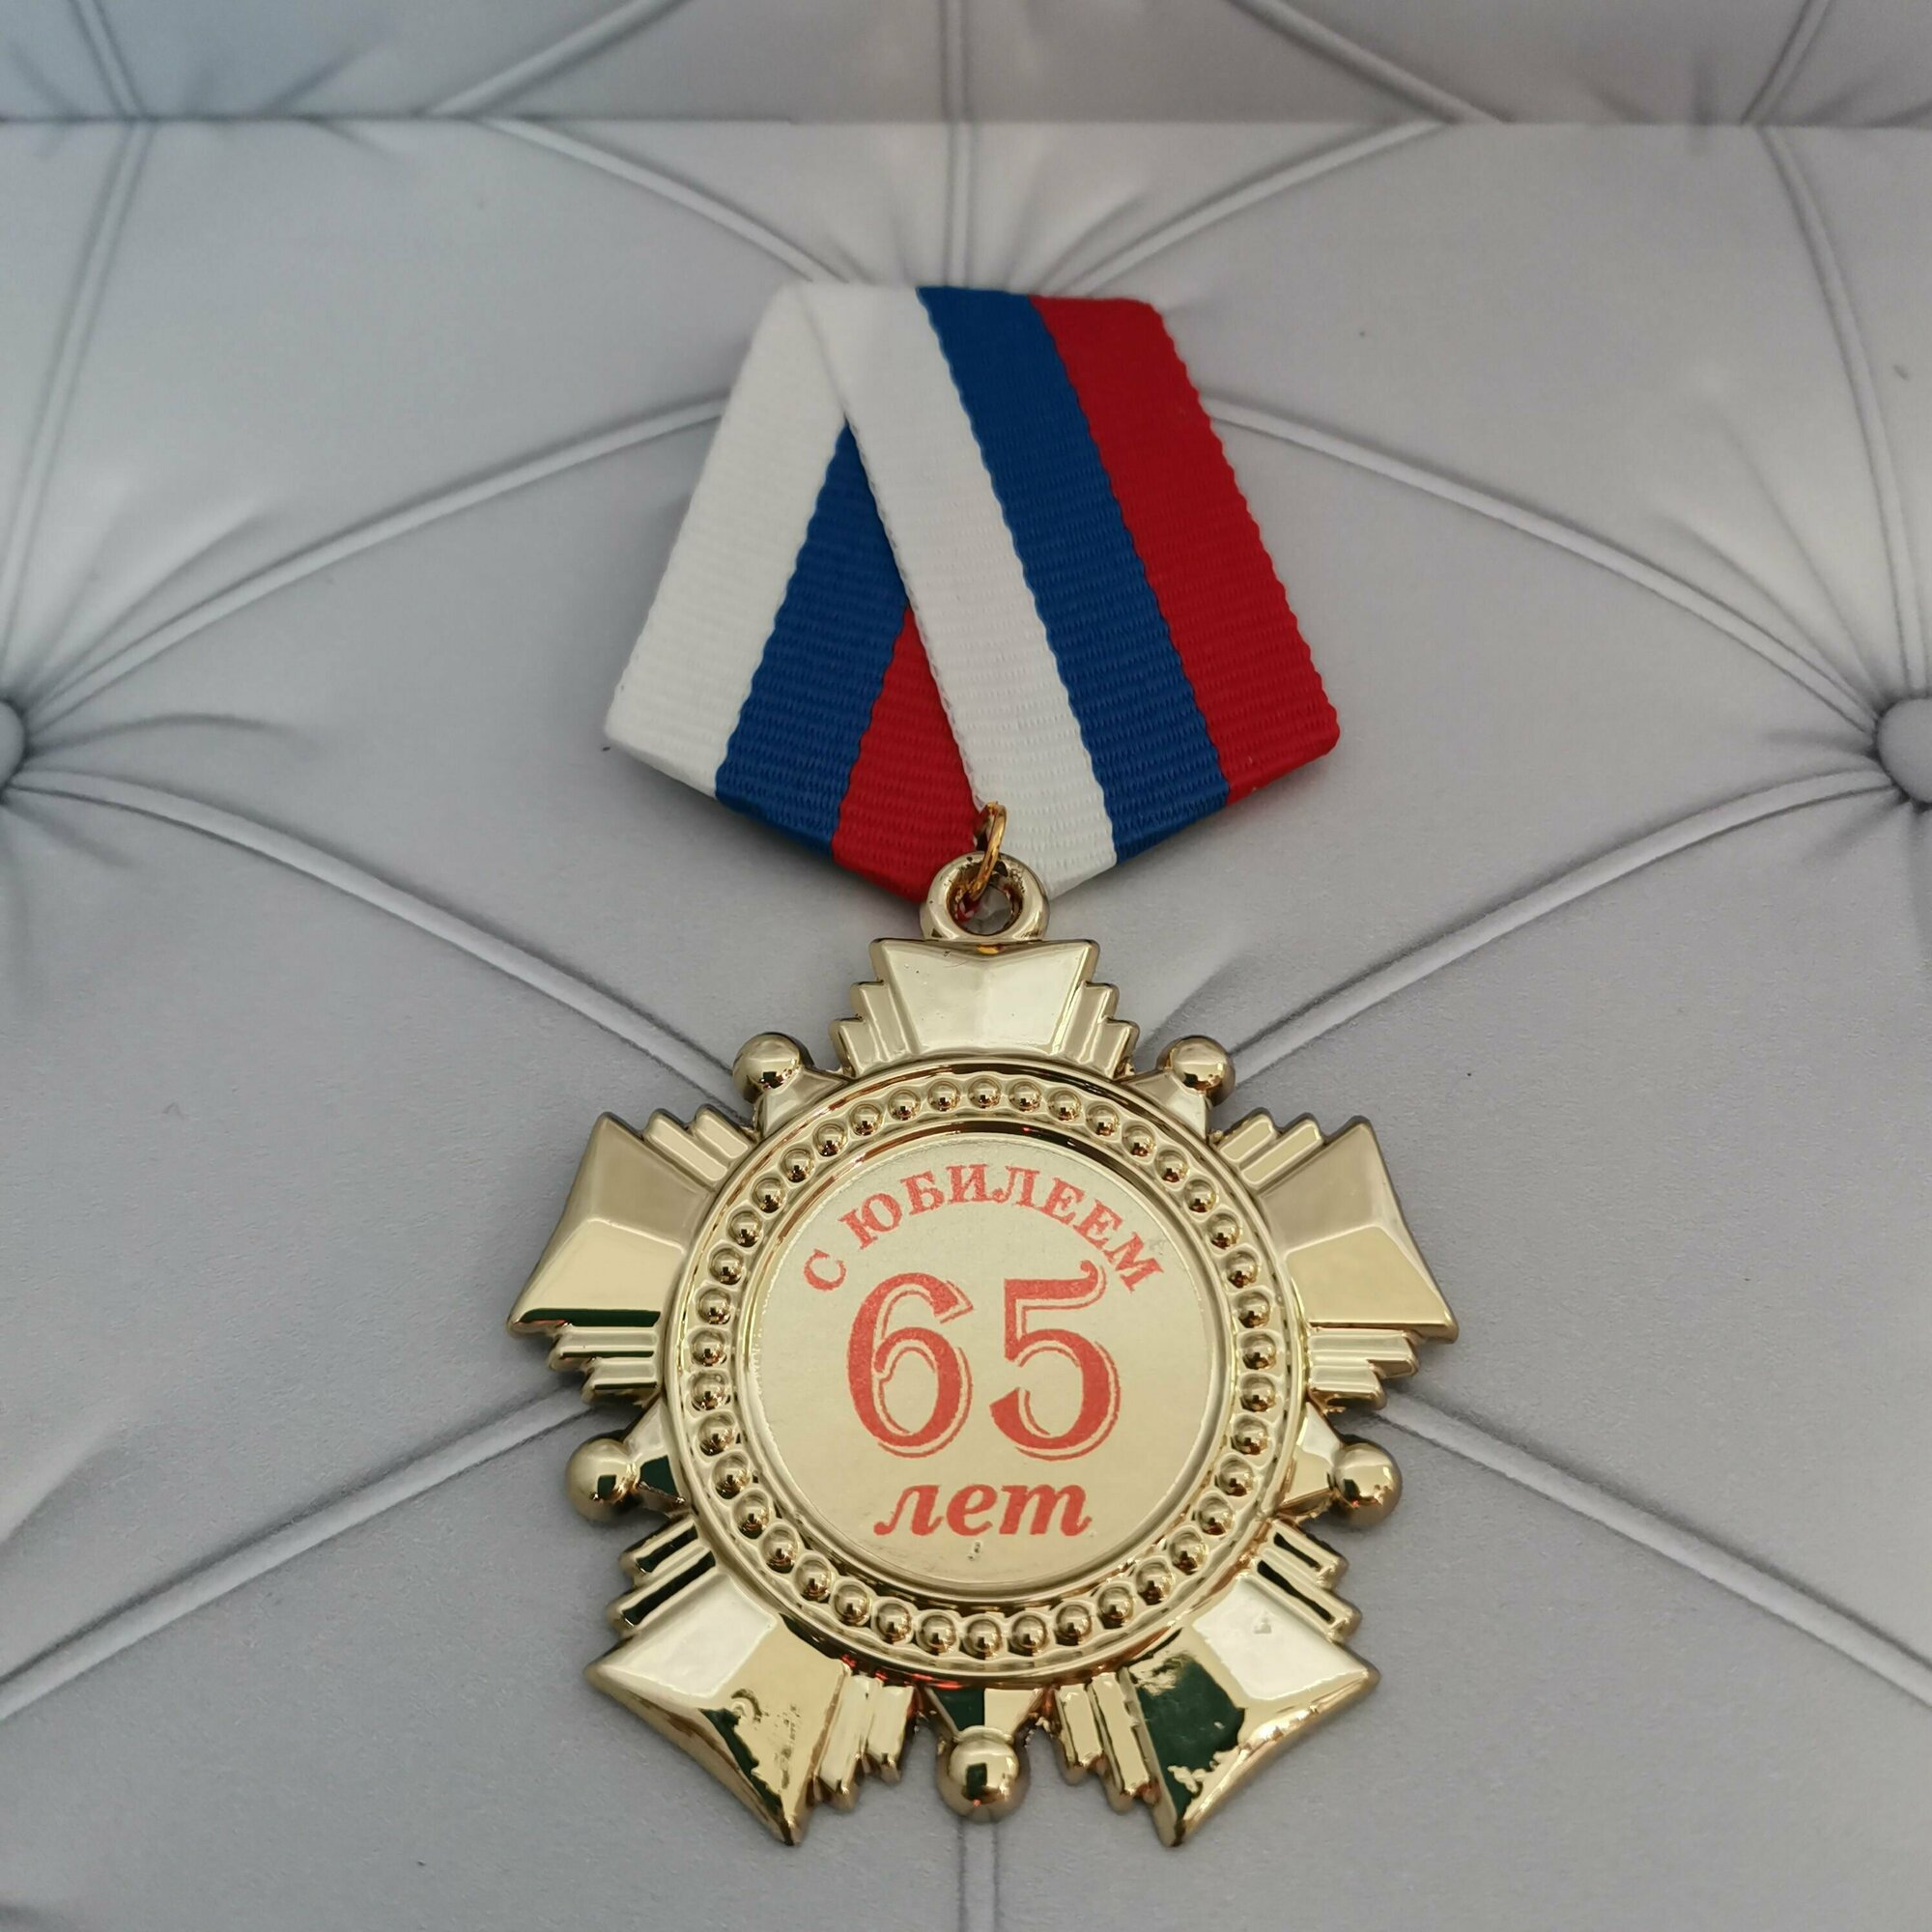 Орден 65 лет, медаль, подарок, сувенир, награда.